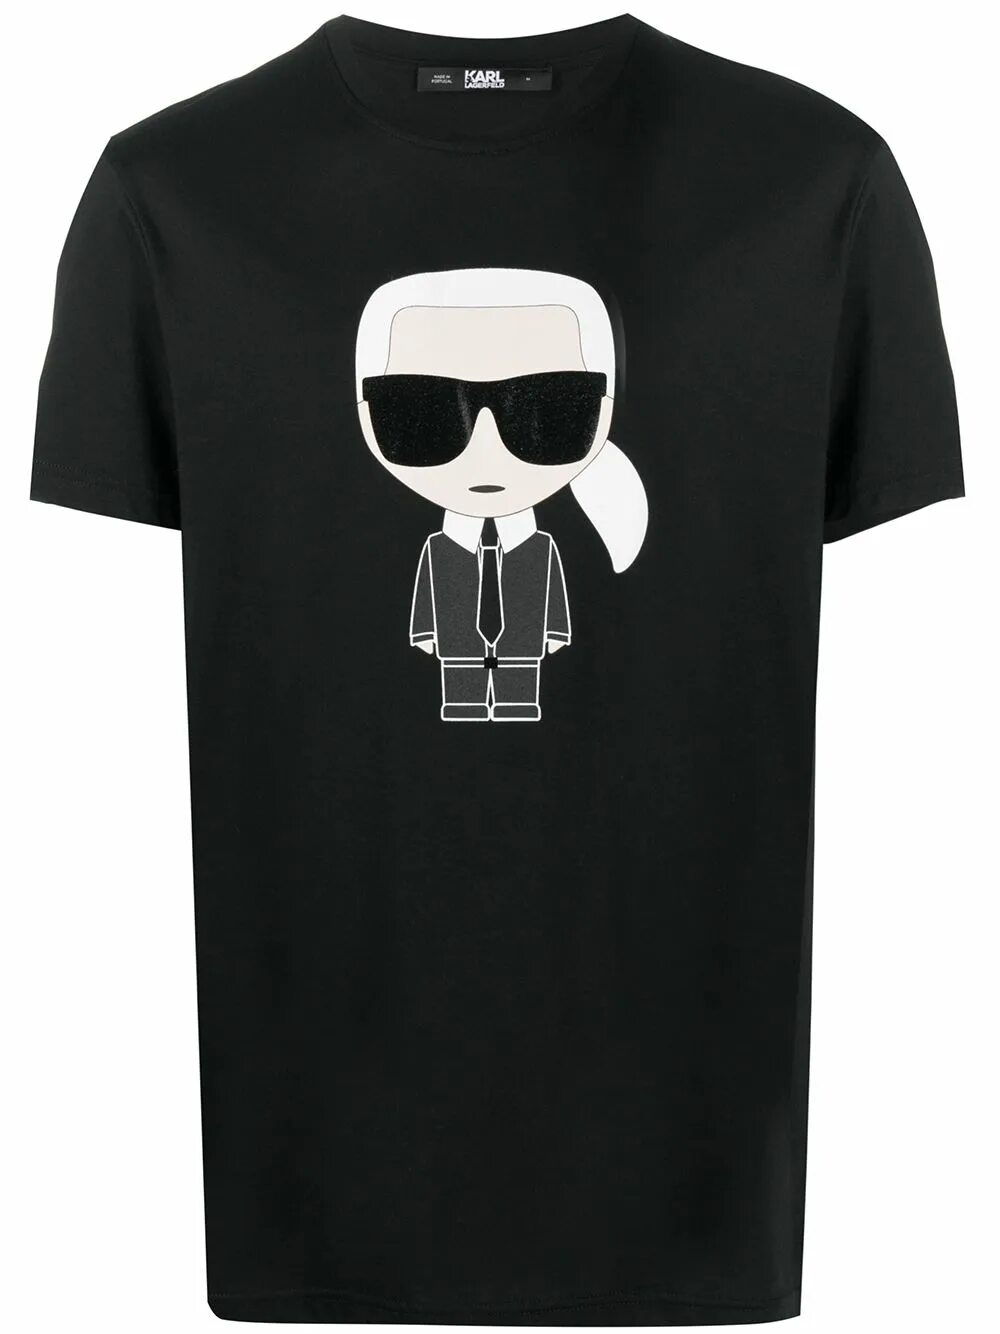 Karl Lagerfeld футболка мужская. Футболки лагерфельд купить